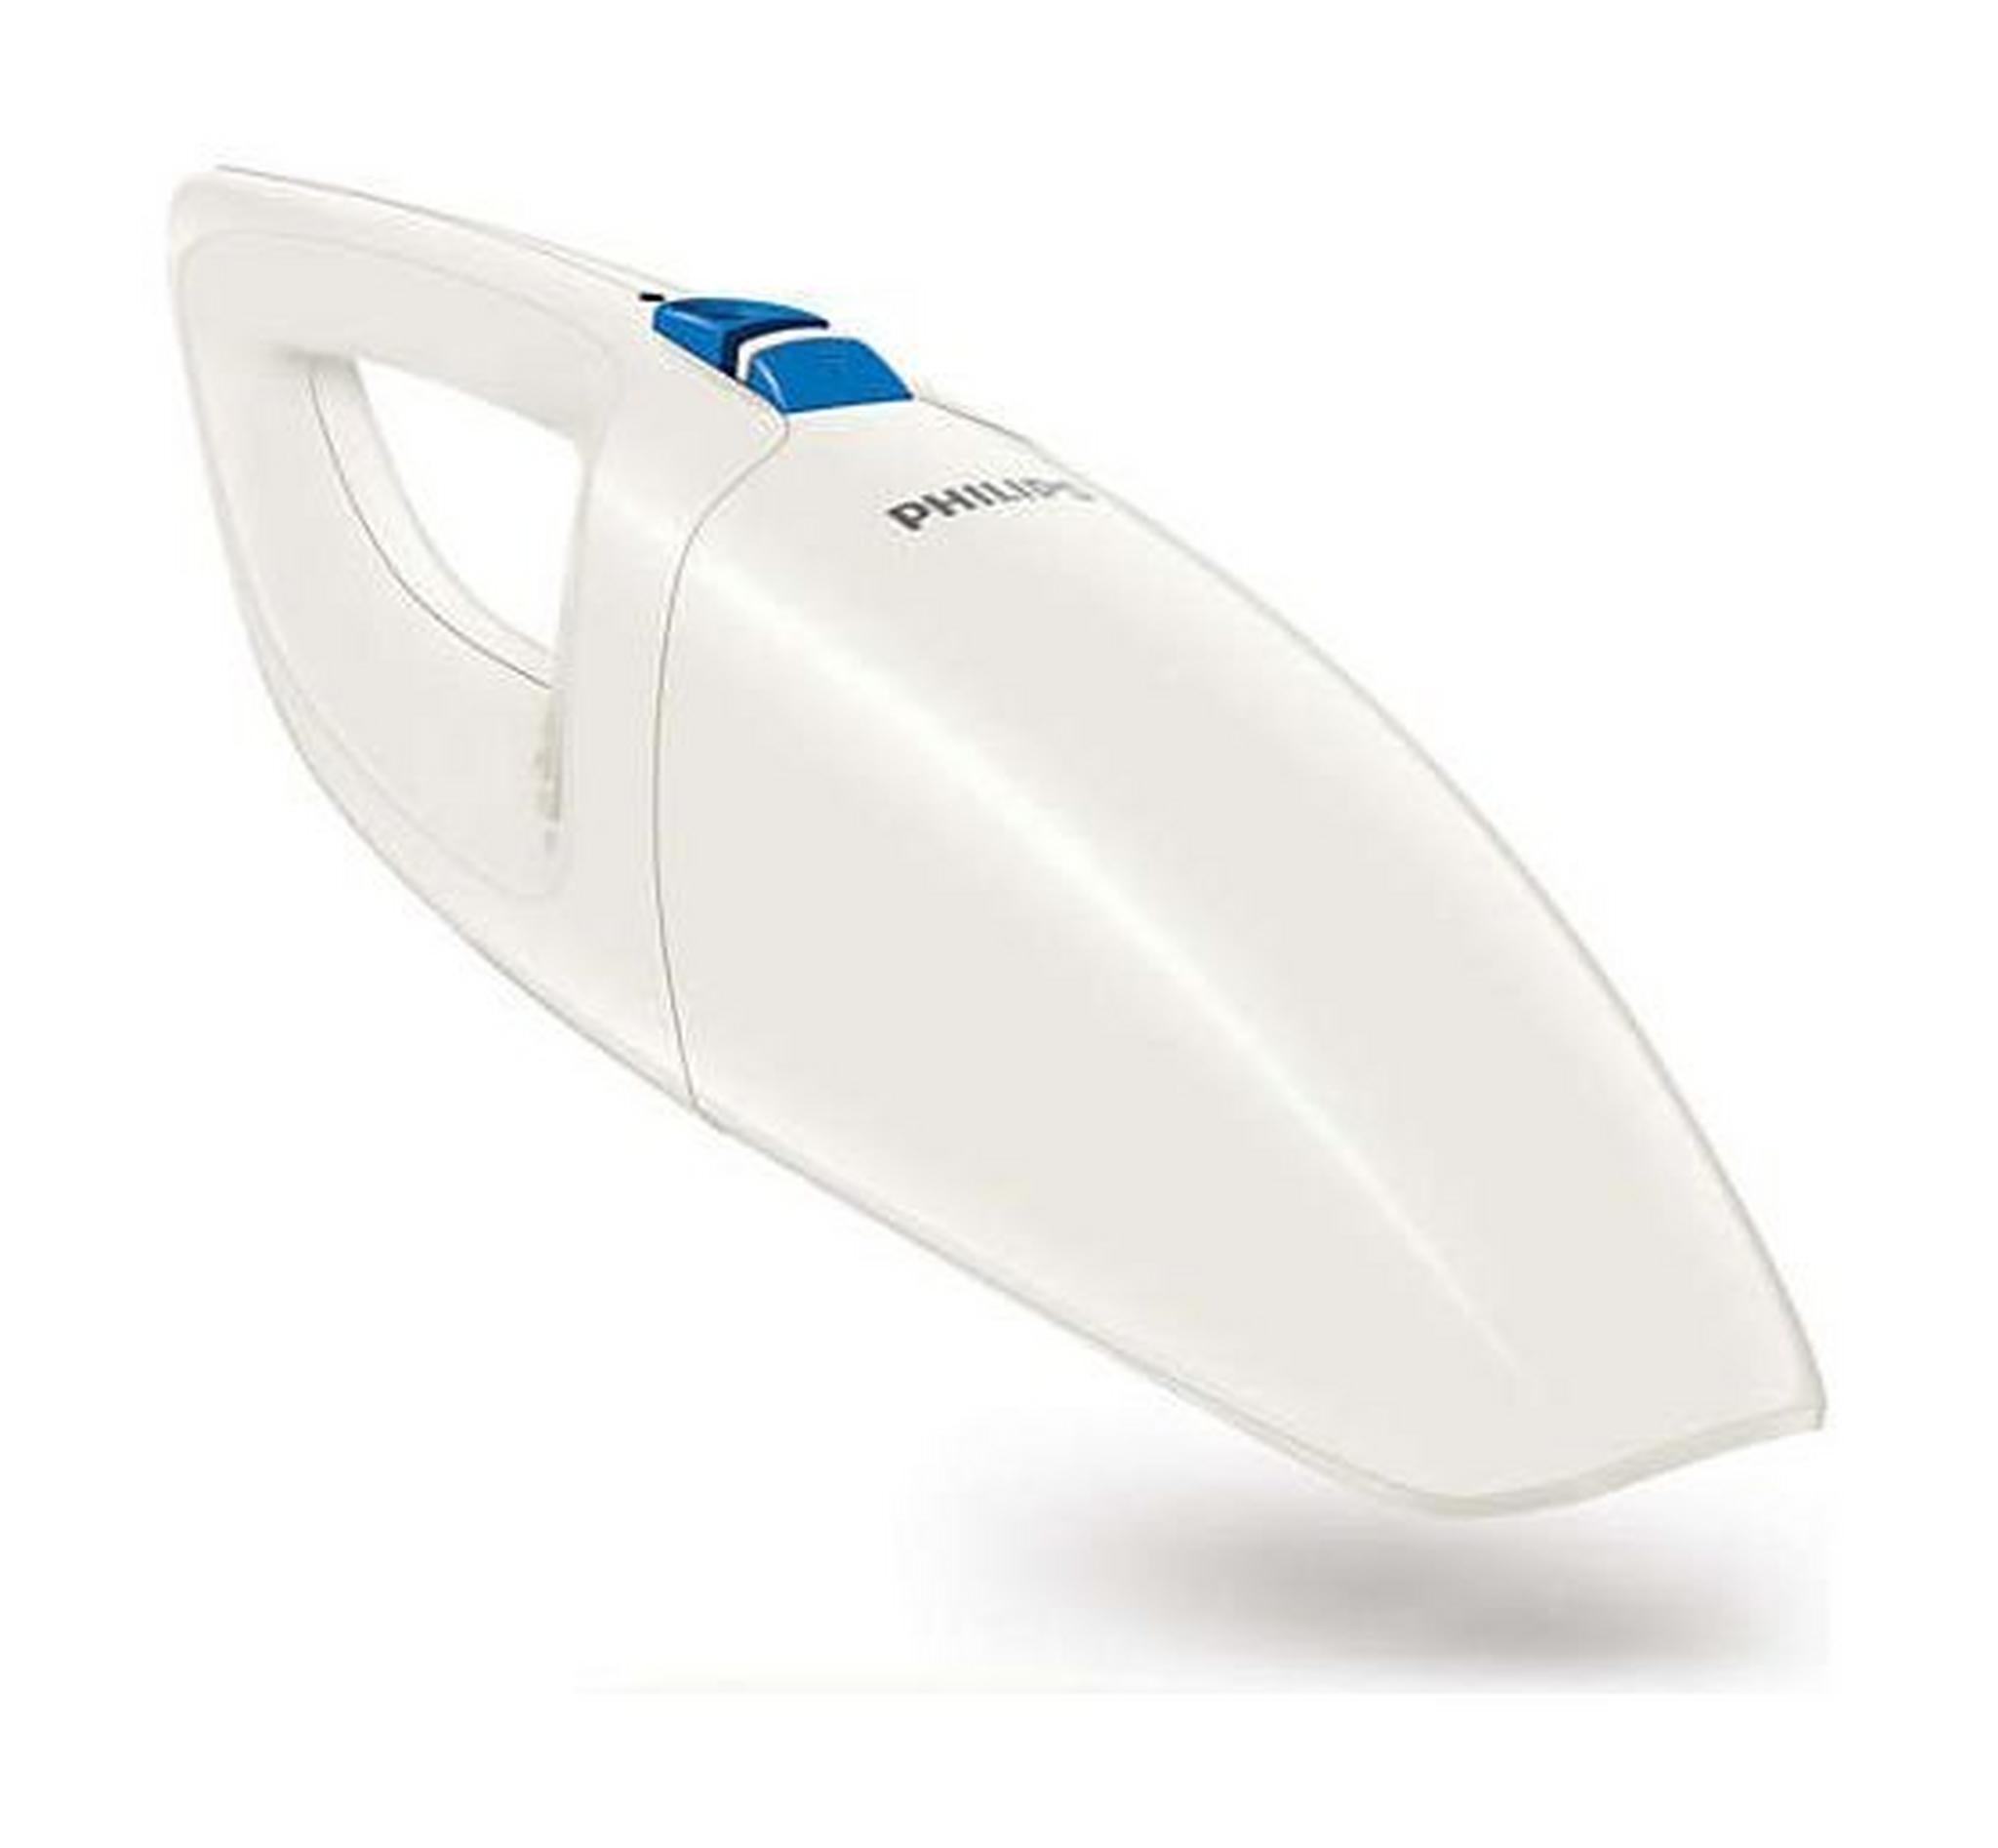 Philips 3.6V 0.5L Mini Handheld Vacuum Cleaner (FC6150/61) – White